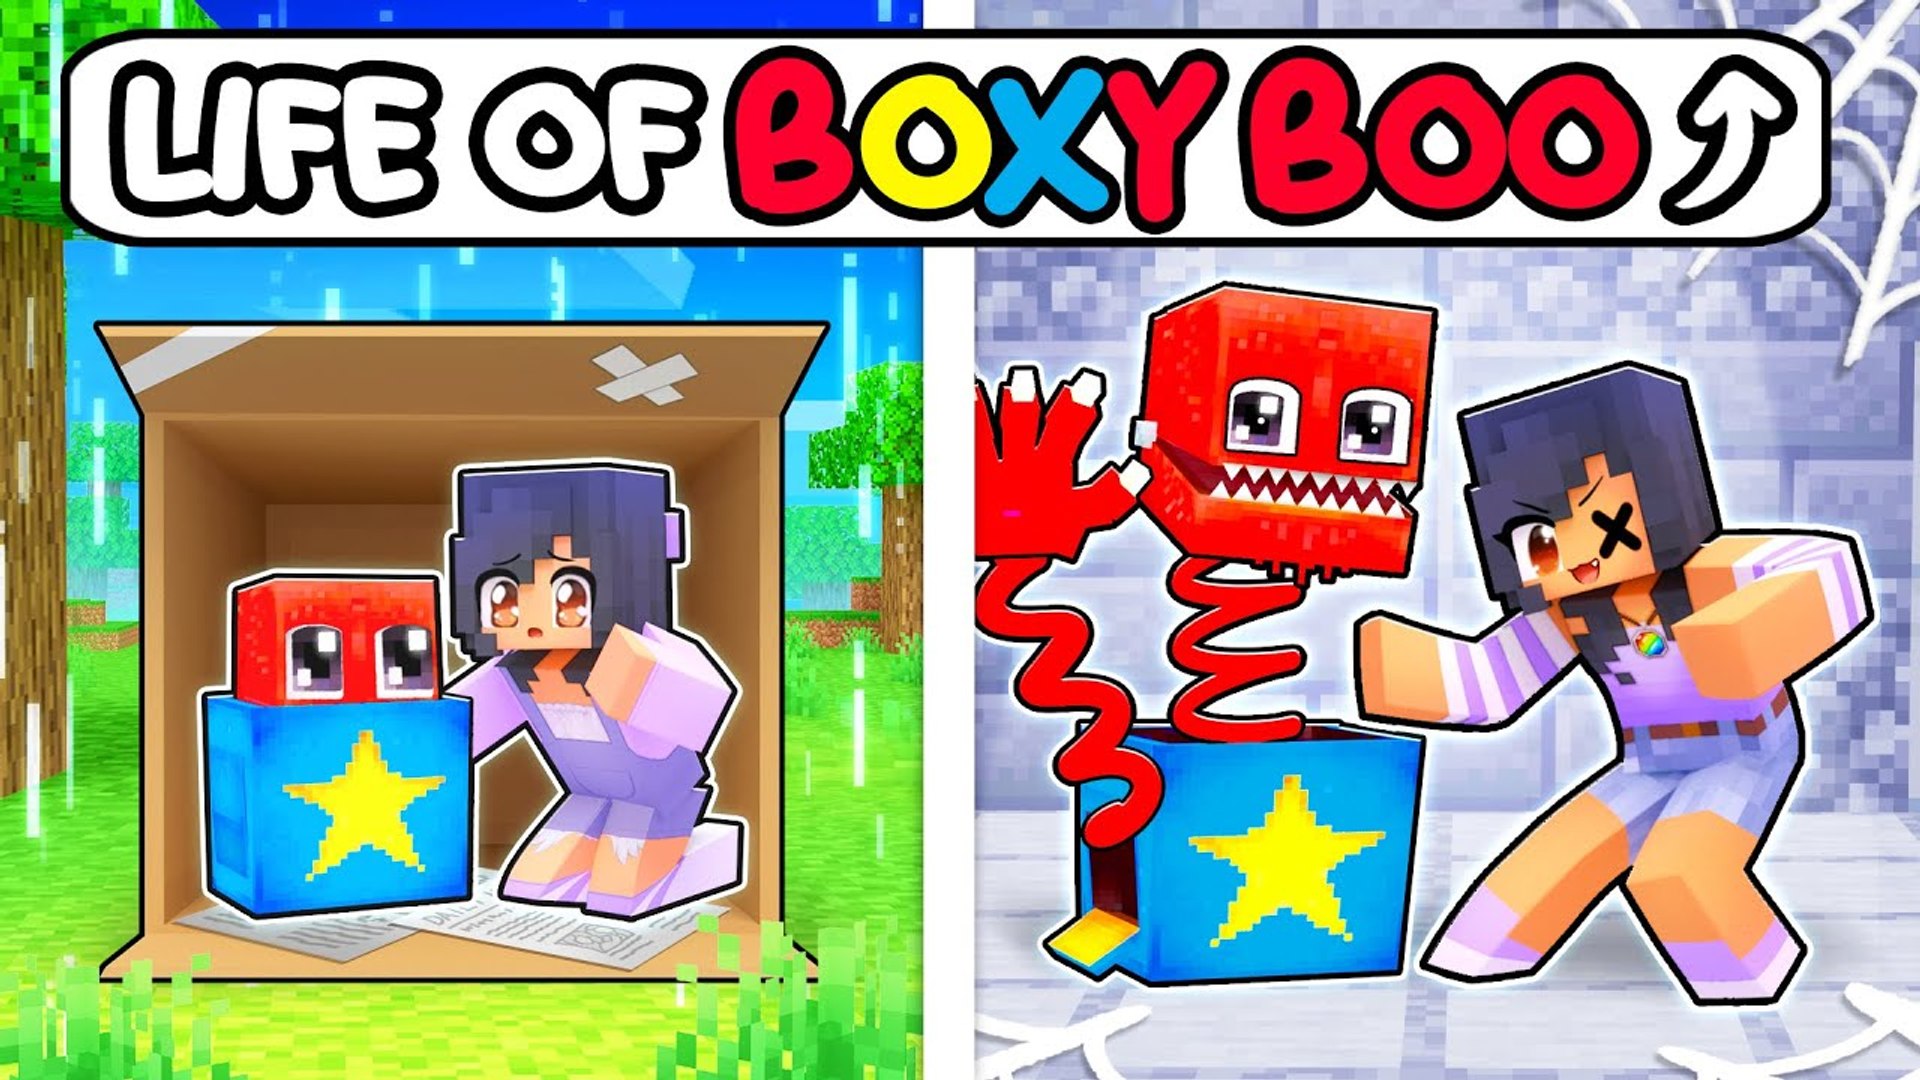 BOXY BOO Falls in LOVE?! (Cartoon Animation) 